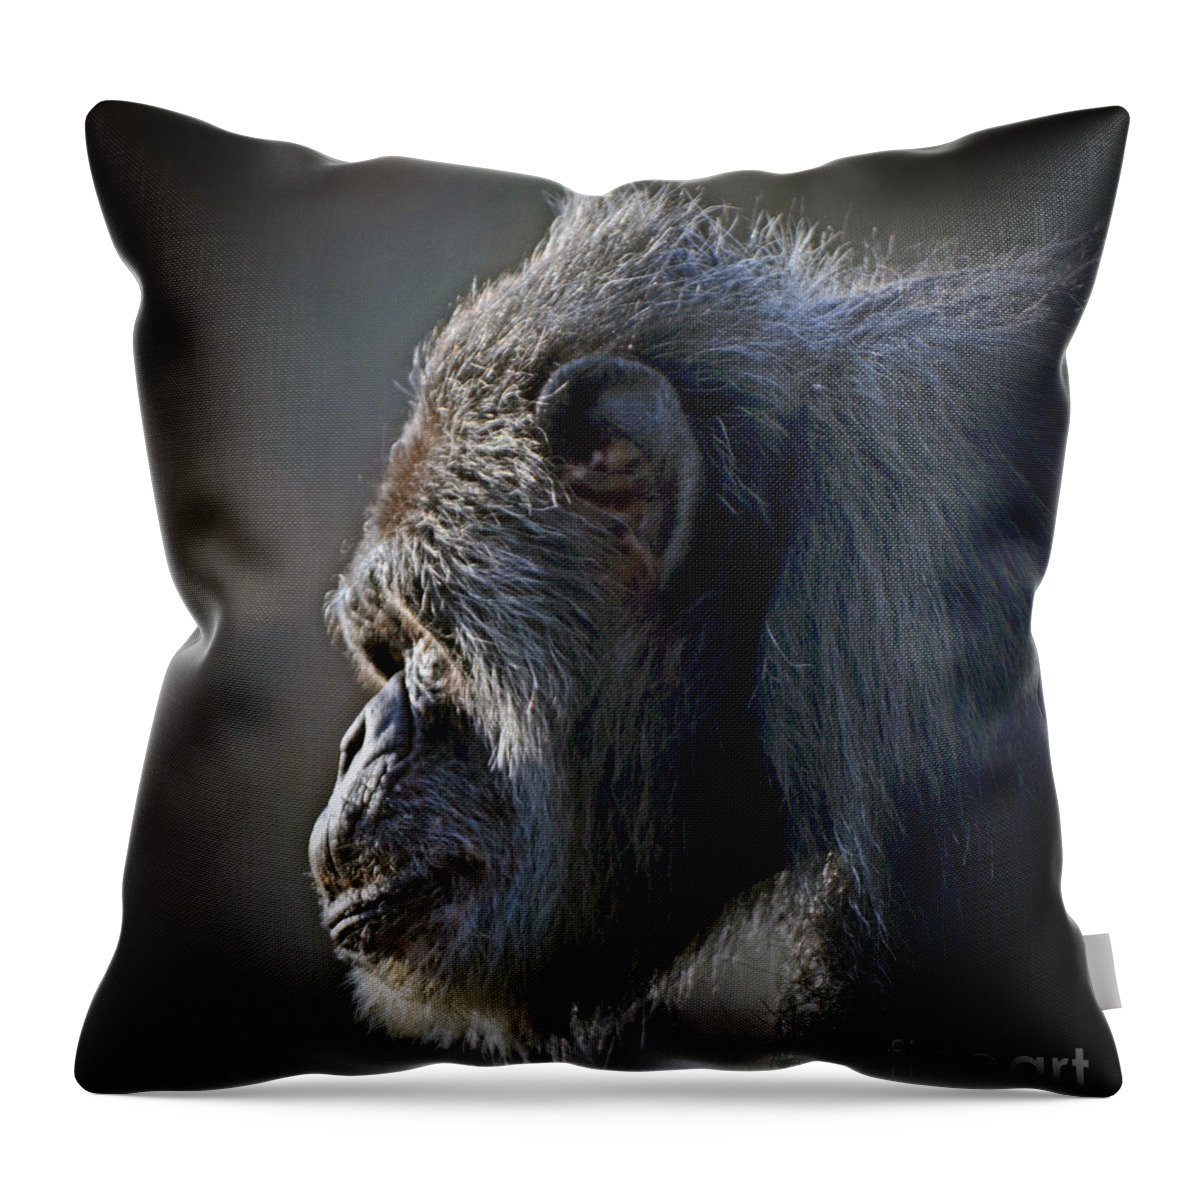 Portrait Of An Elderly Chimp Throw Pillow featuring the photograph Profile Portrait of an Elderly Chimp by Jim Fitzpatrick